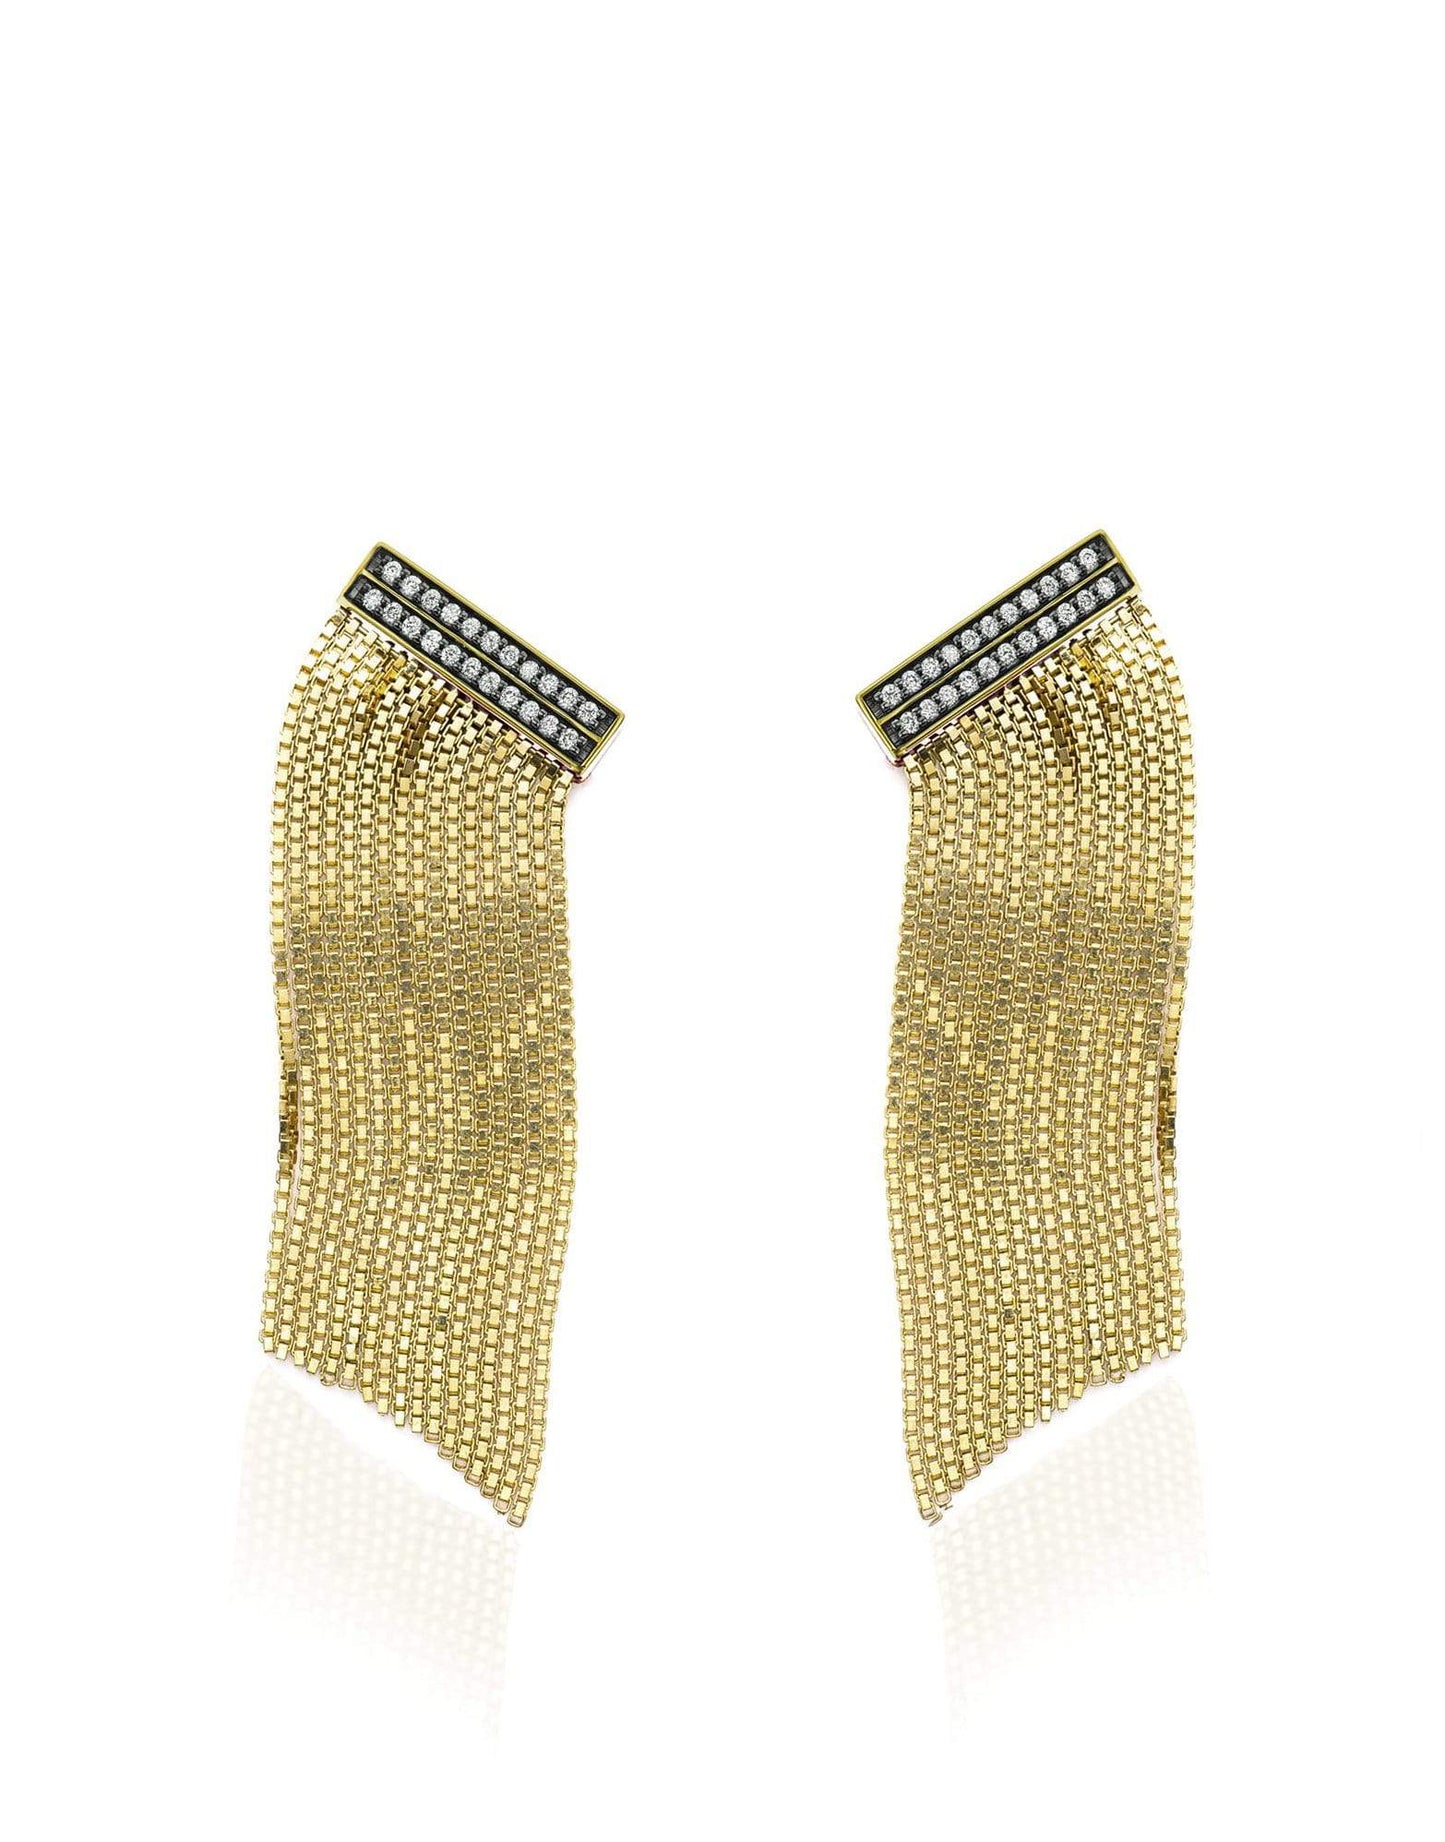 SORELLINA-Axl Fringe Bar Earrings-YELLOW GOLD